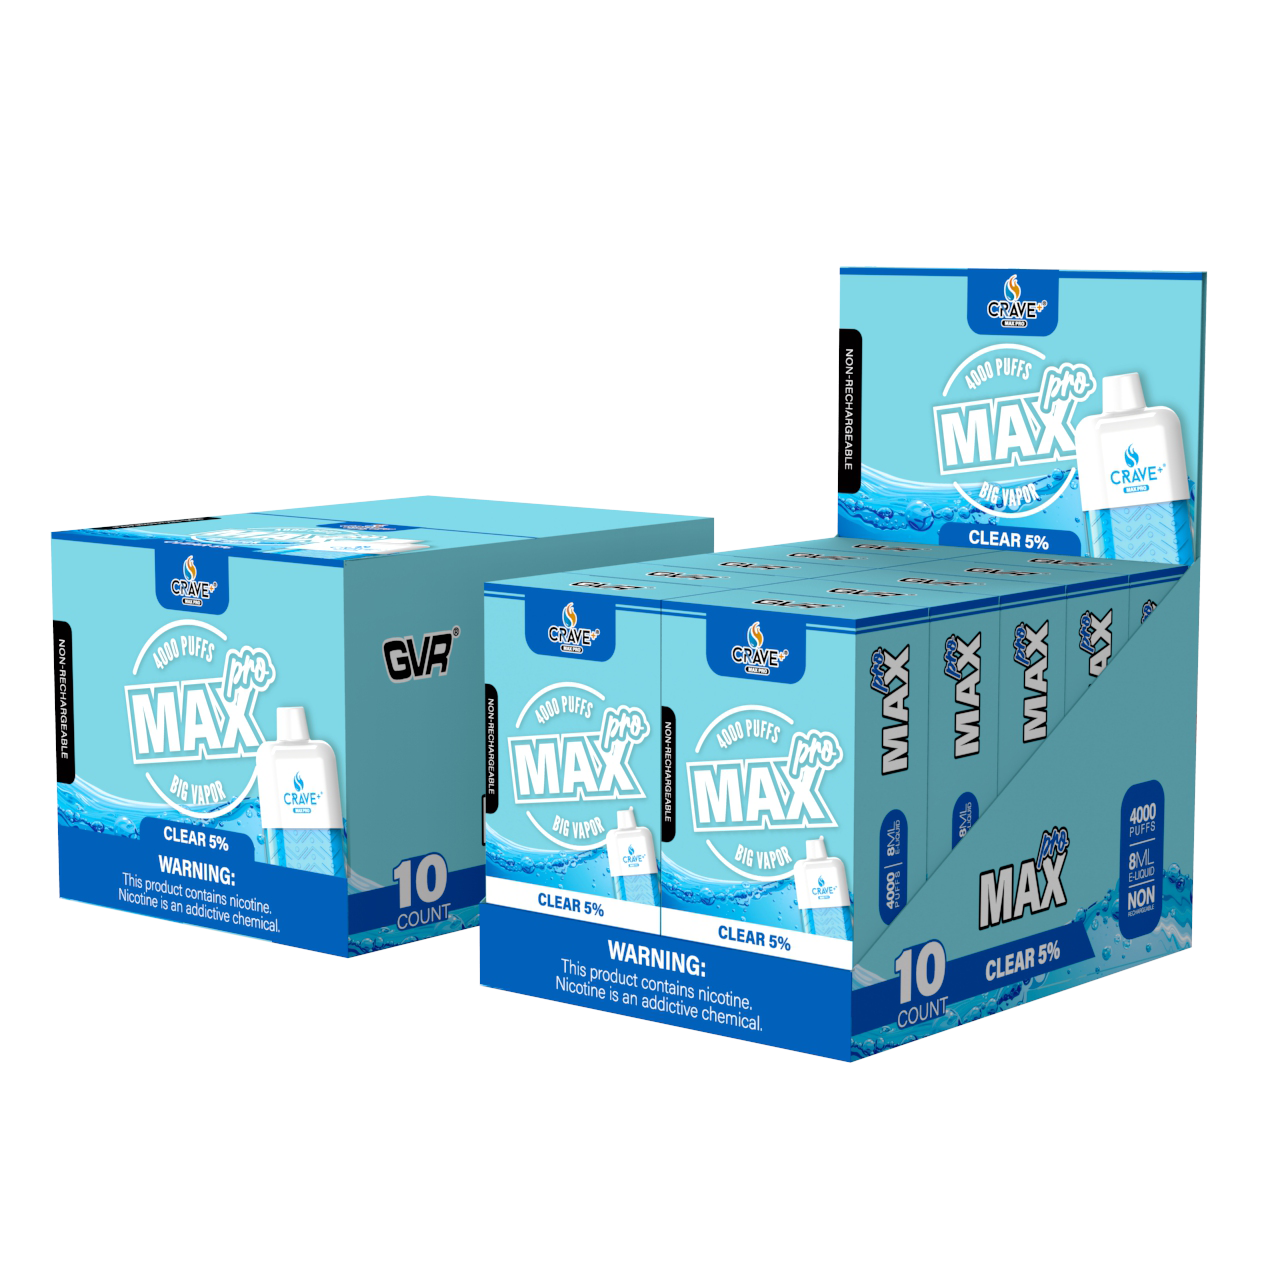 Crave Max Pro 4000 - Clear 5% Box